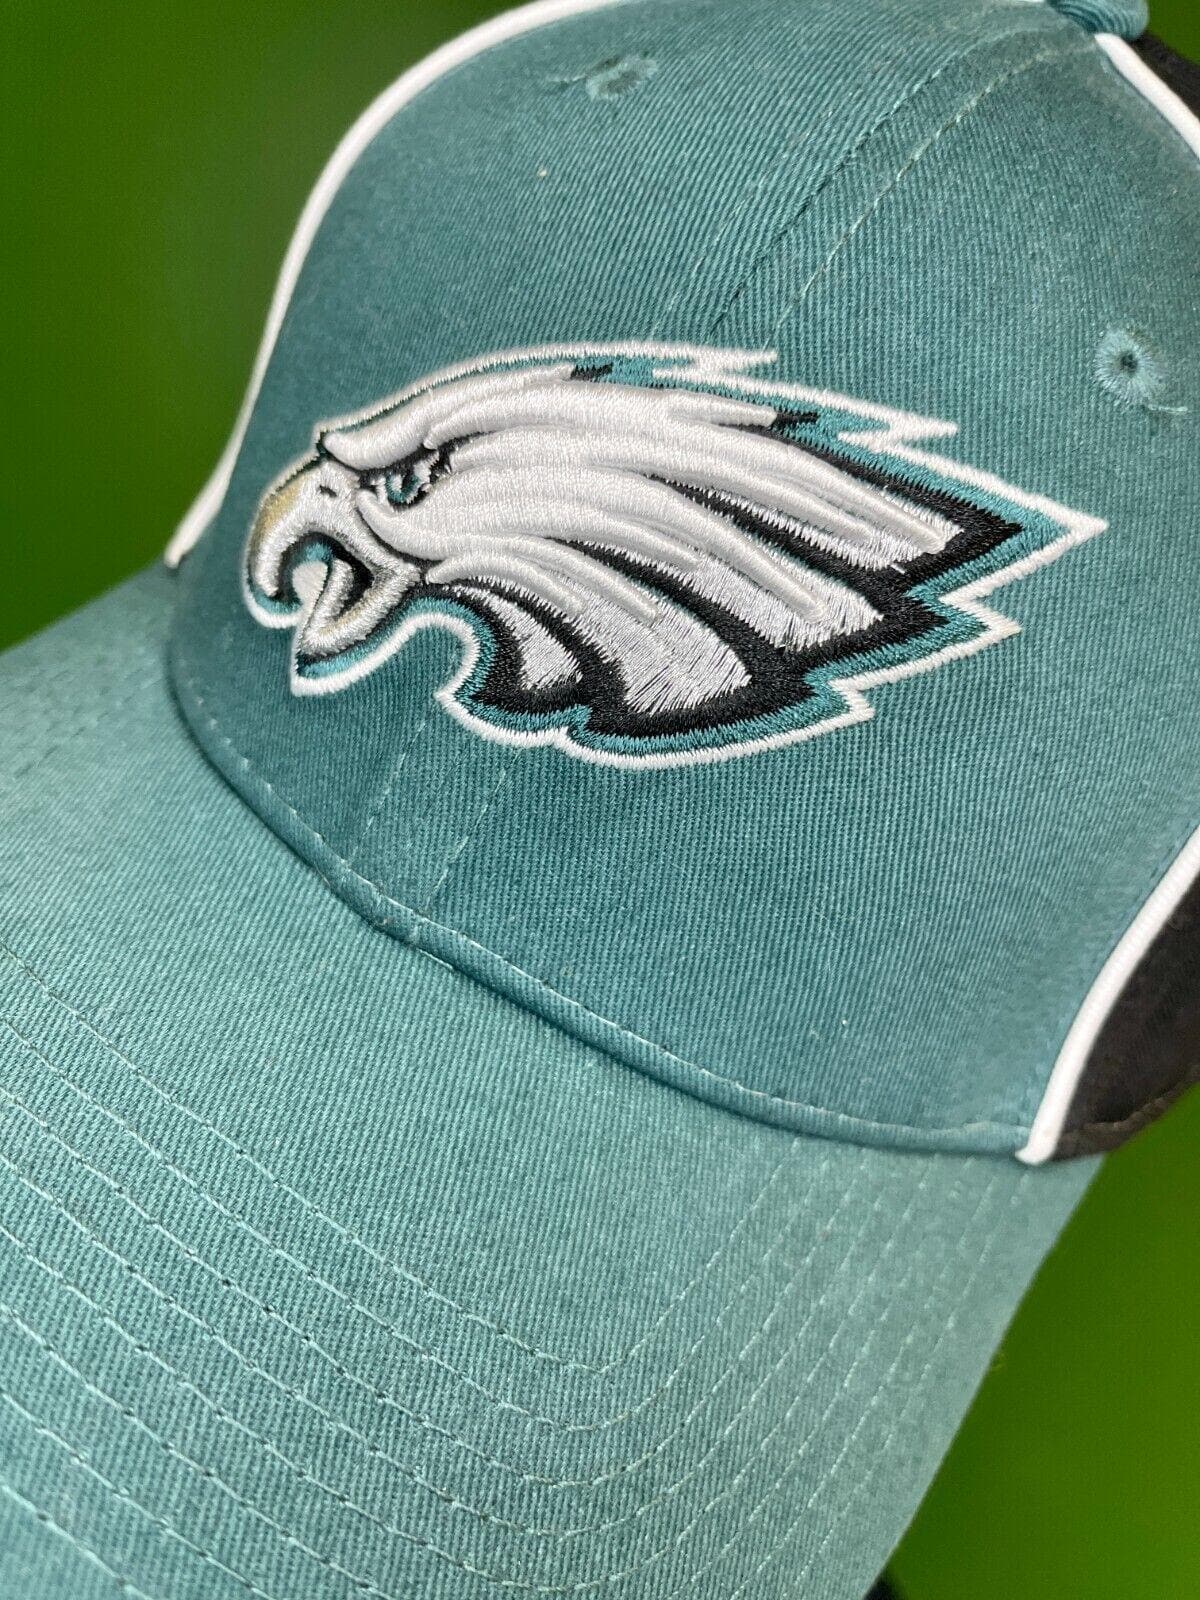 NFL Philadelphia Eagles New Era 9FORTY Baseball Cap Hat OSFA